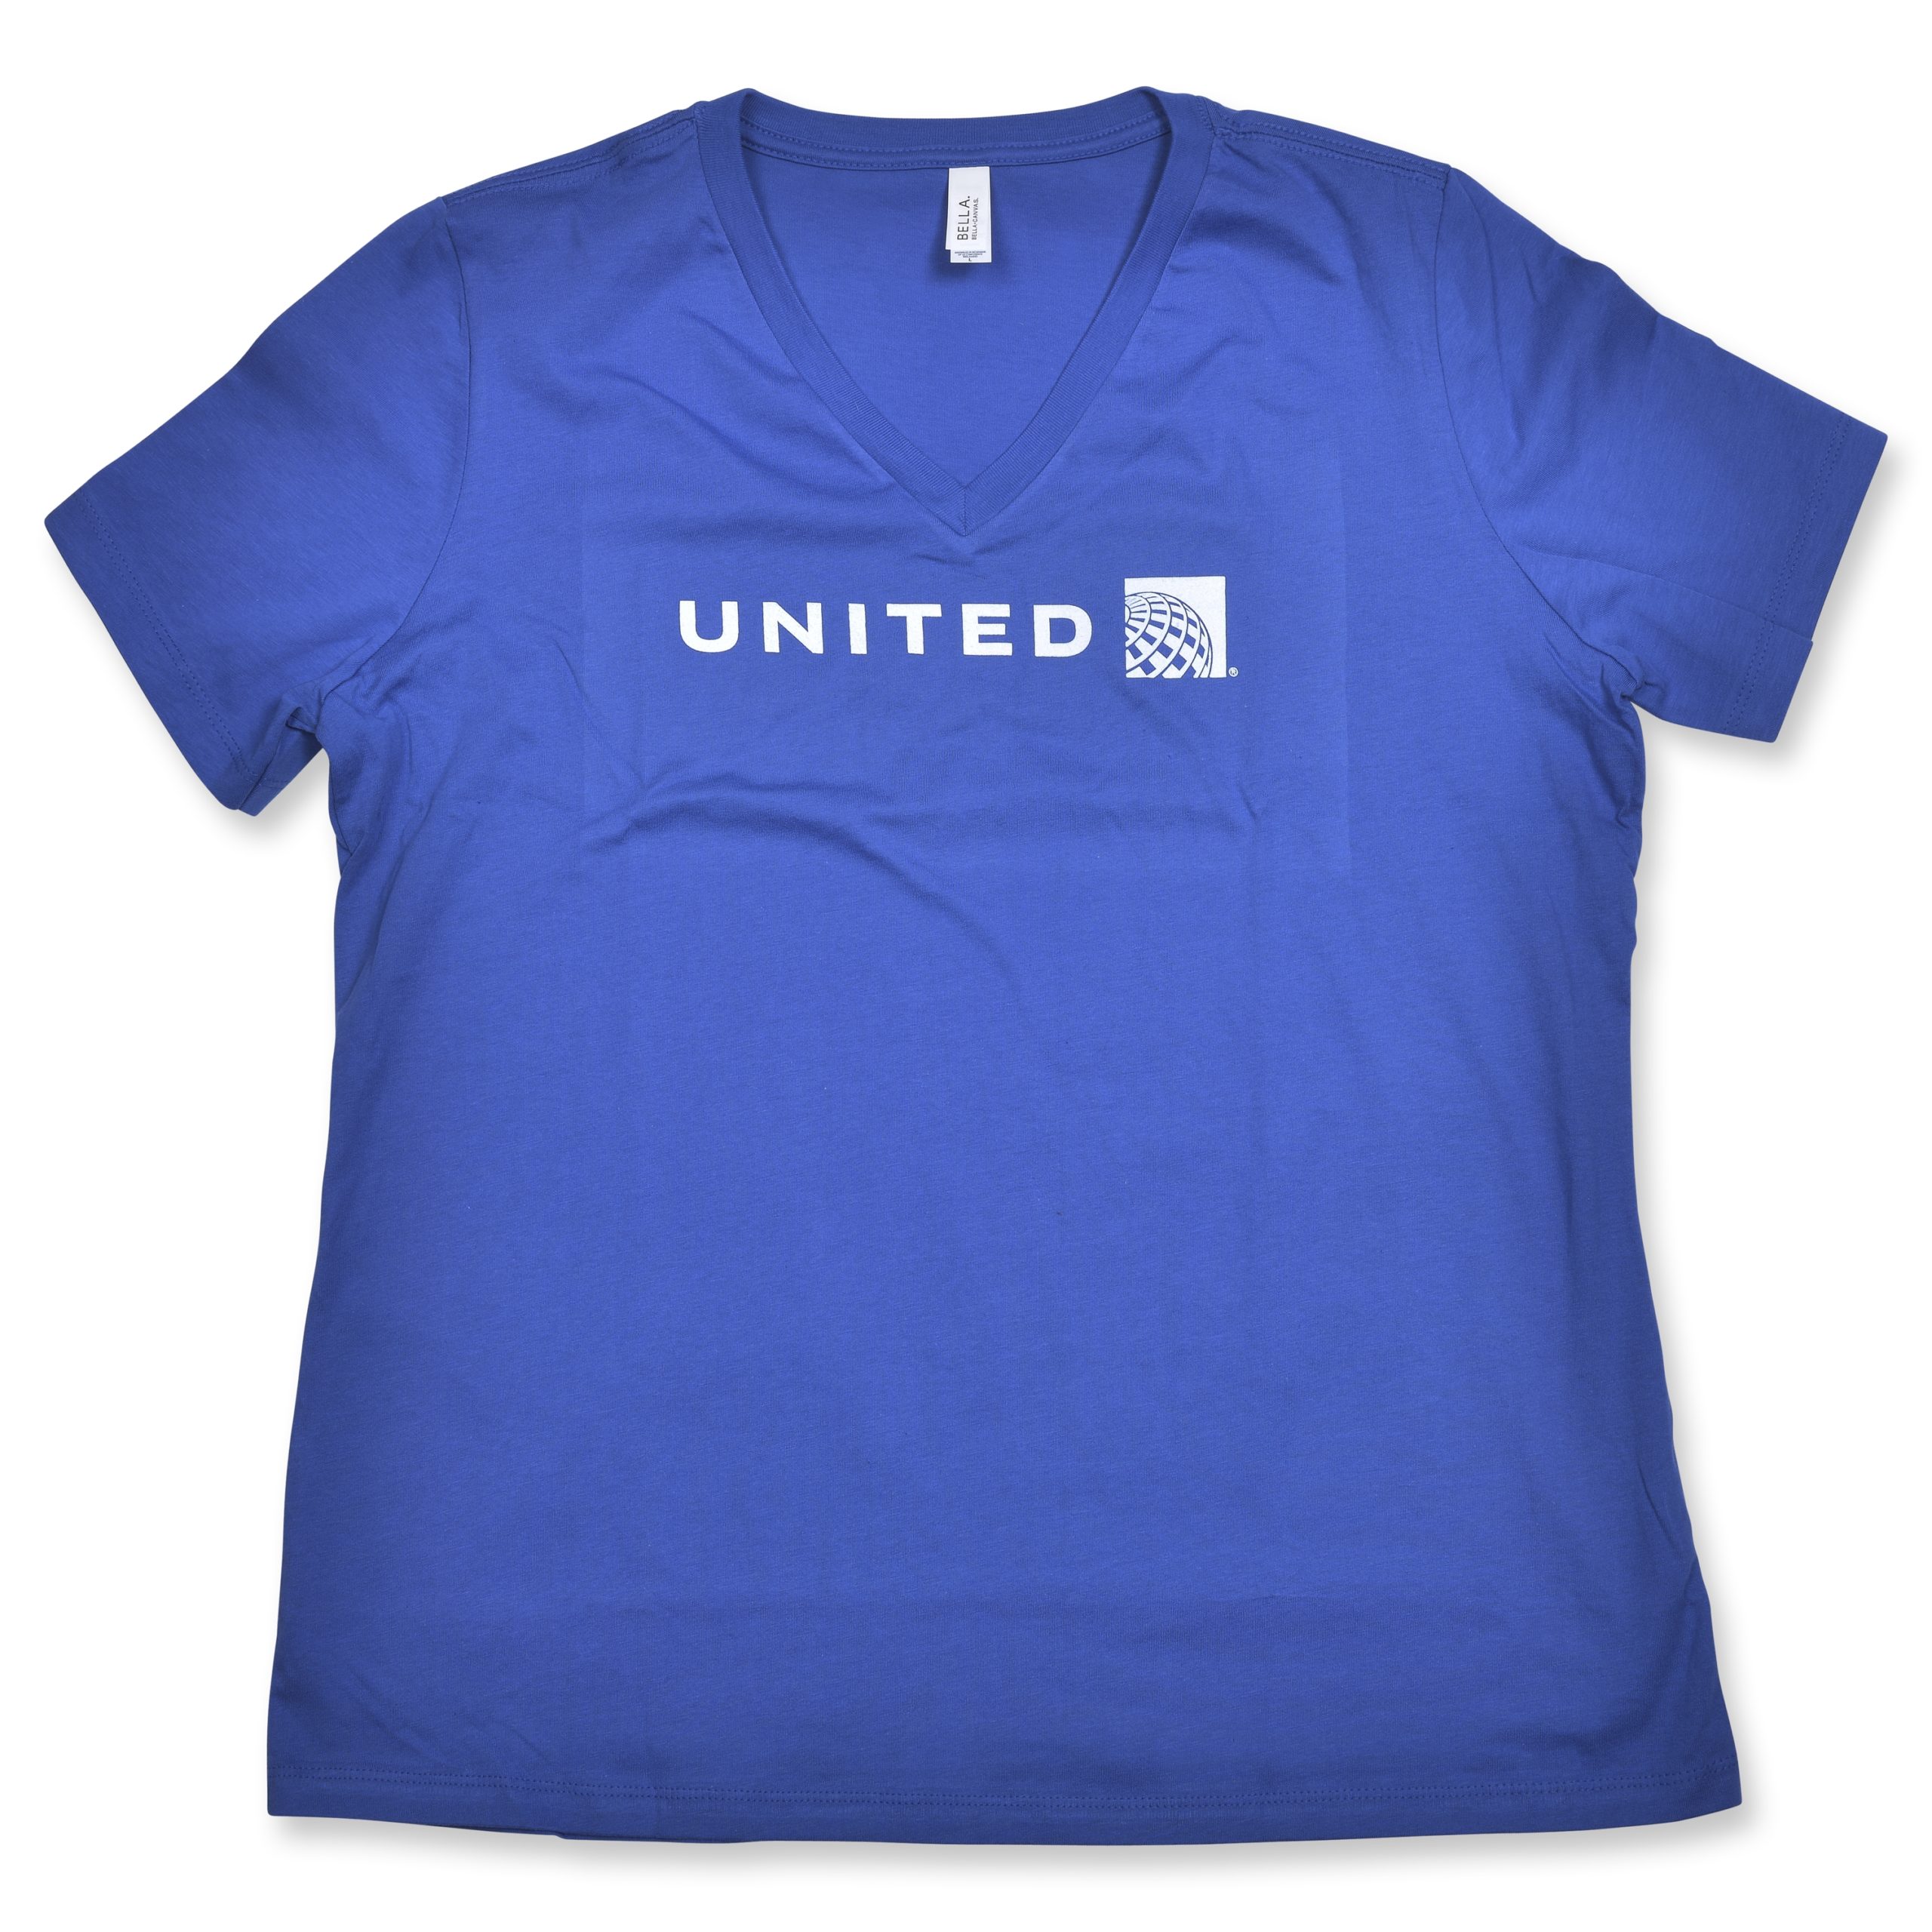 United Airlines T Shirt - Royal - T-Shirts - Clothing